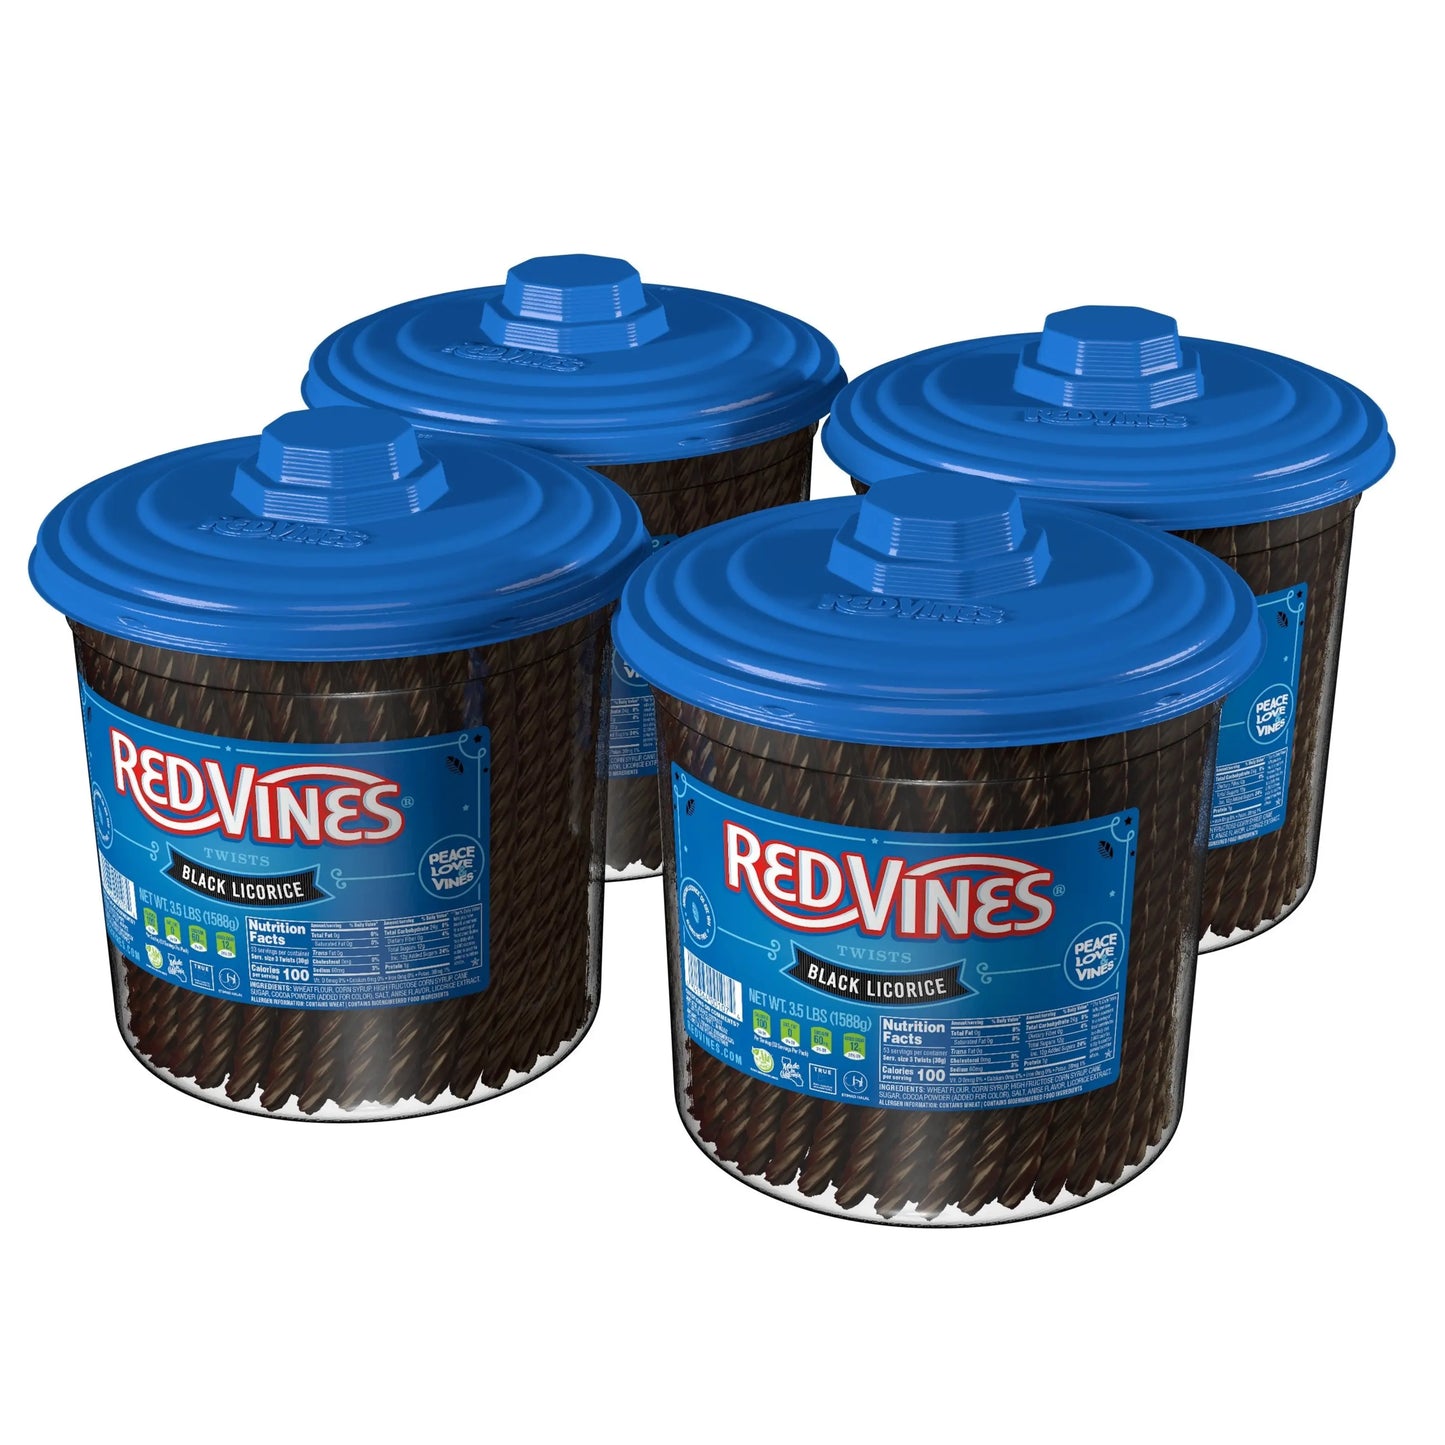 4 pack of RED VINES Black Licorice 3.5 Pound Jars